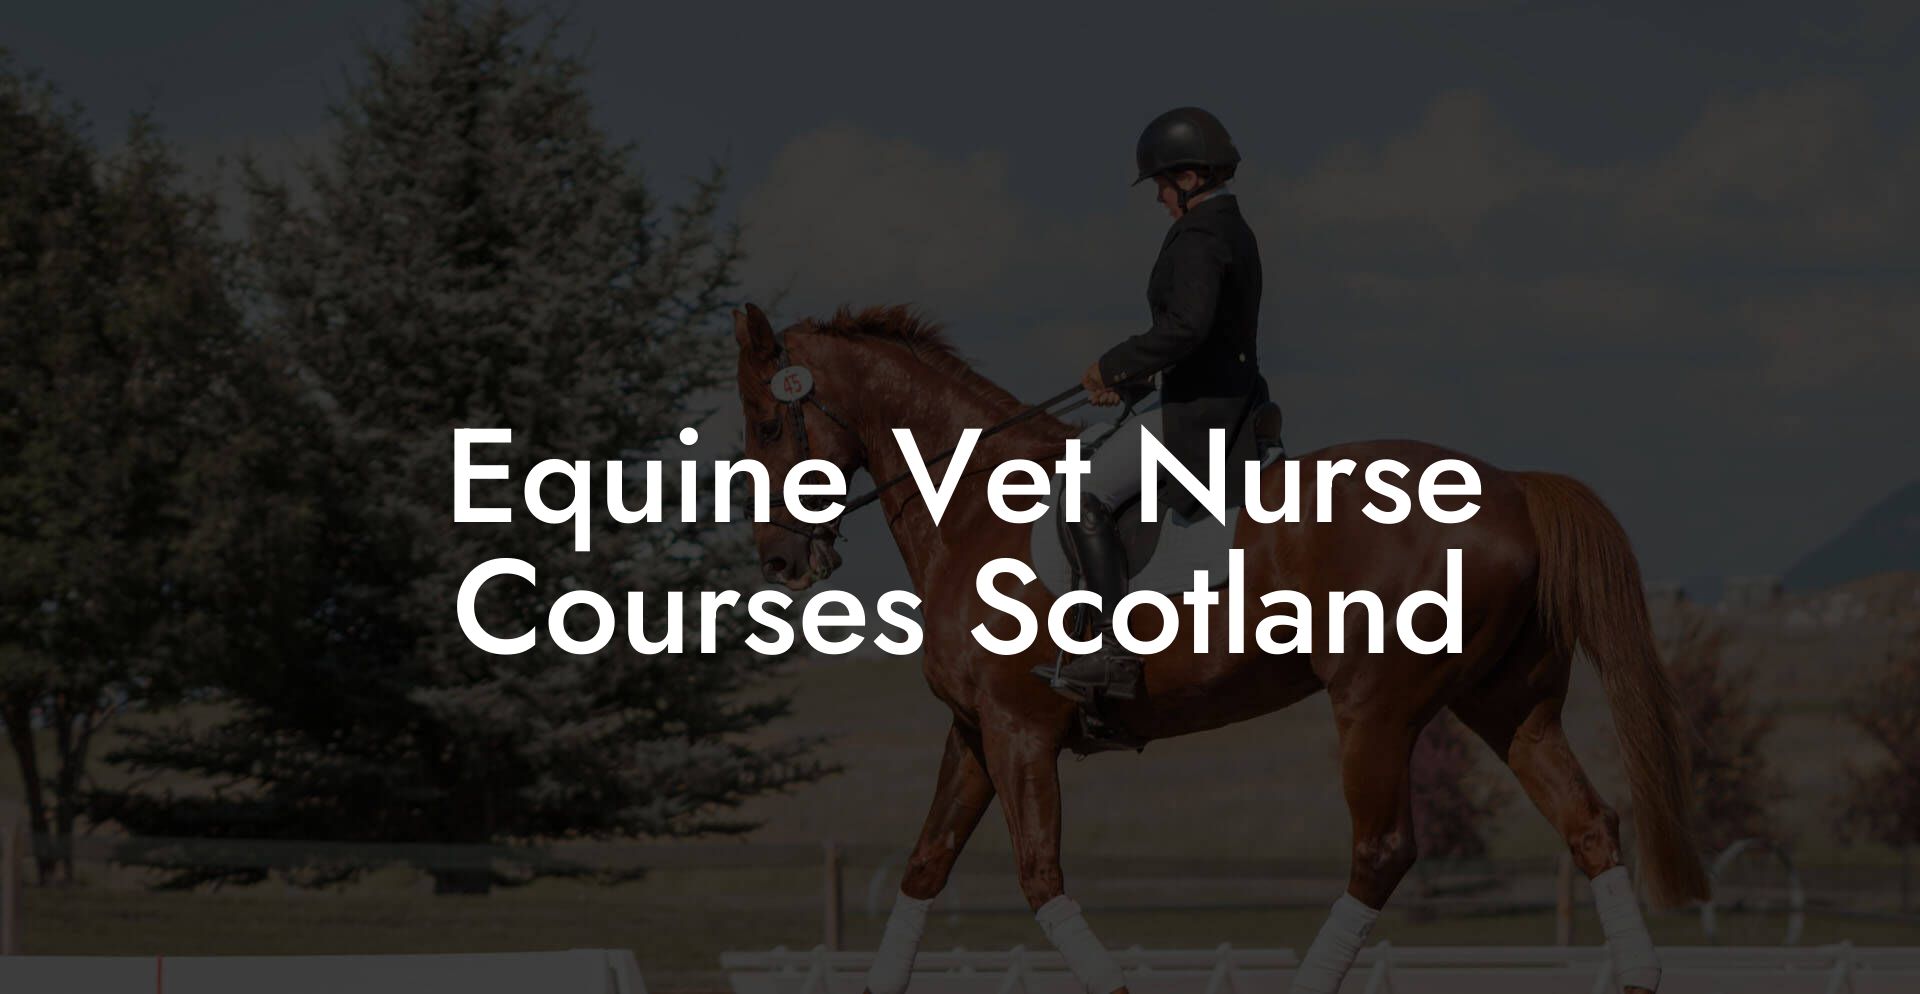 Equine Vet Nurse Courses Scotland